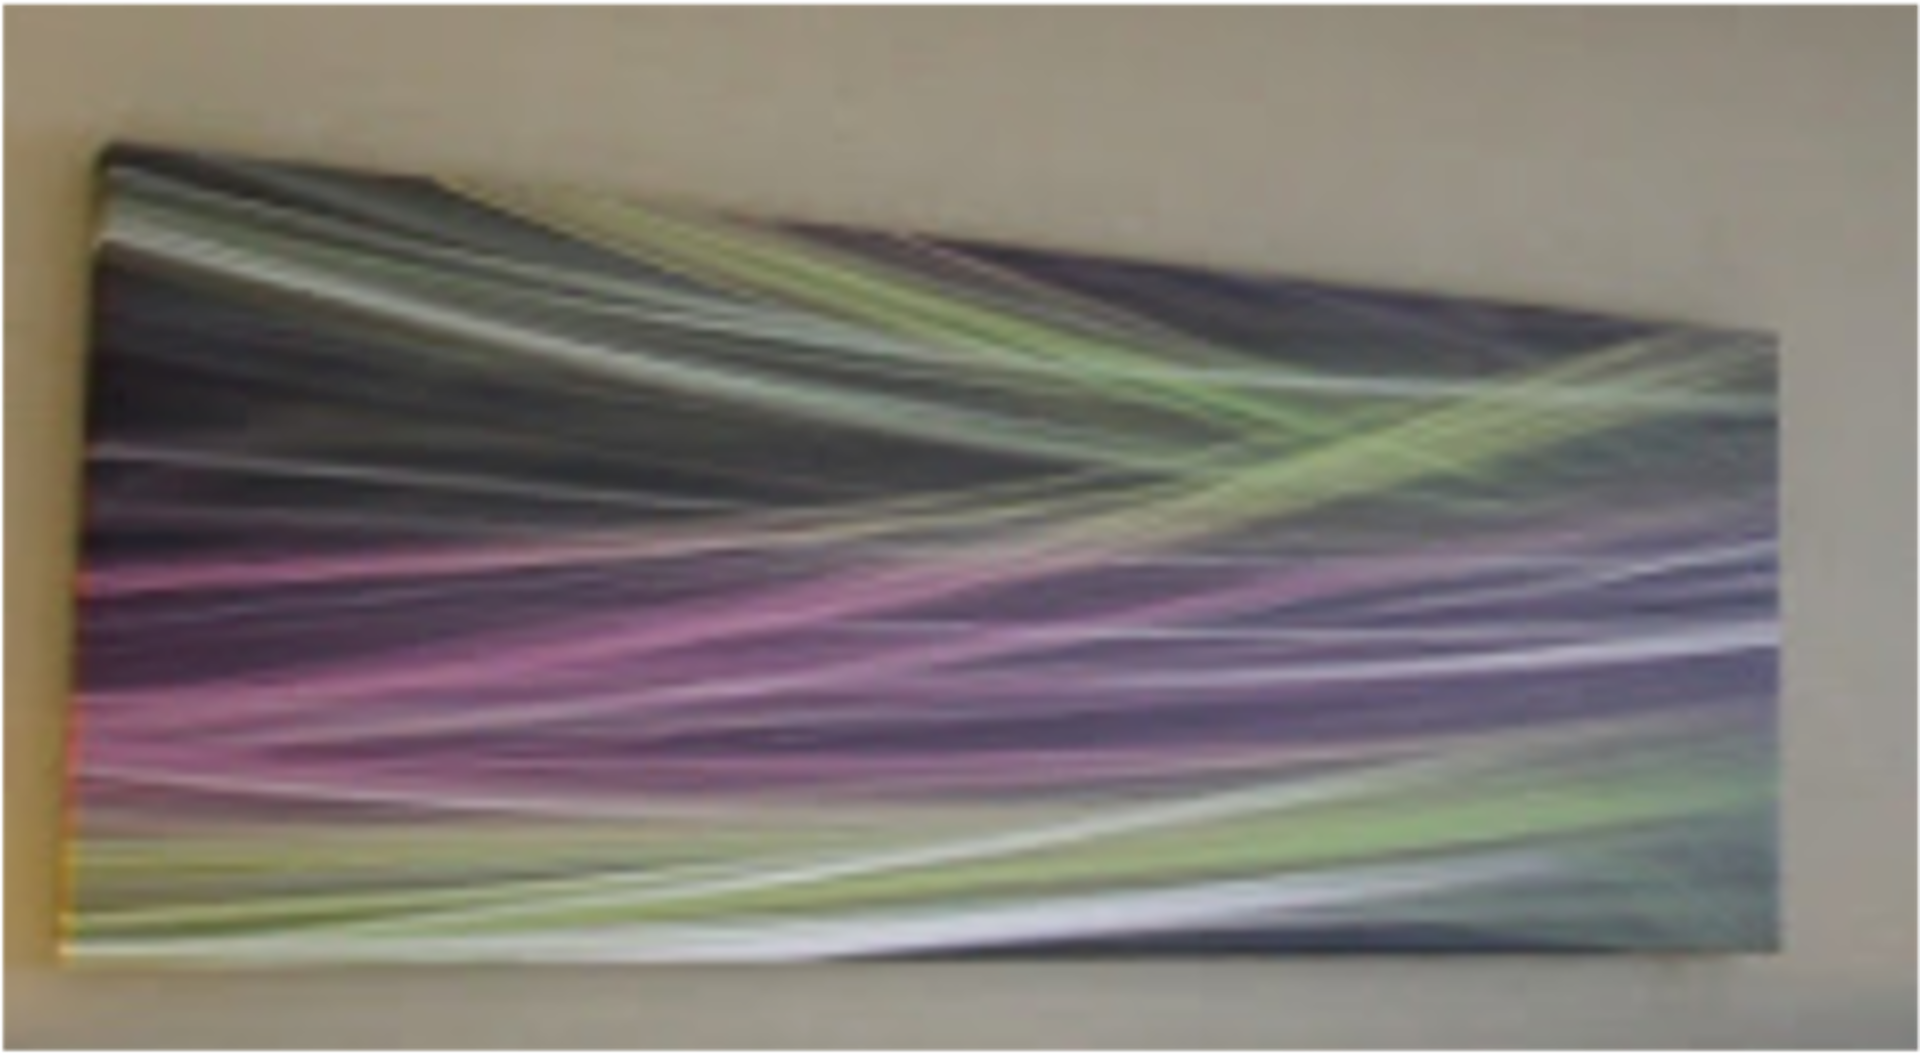 Portobello abstract canvas artwork panel 1500 x 600mm - Image 2 of 2